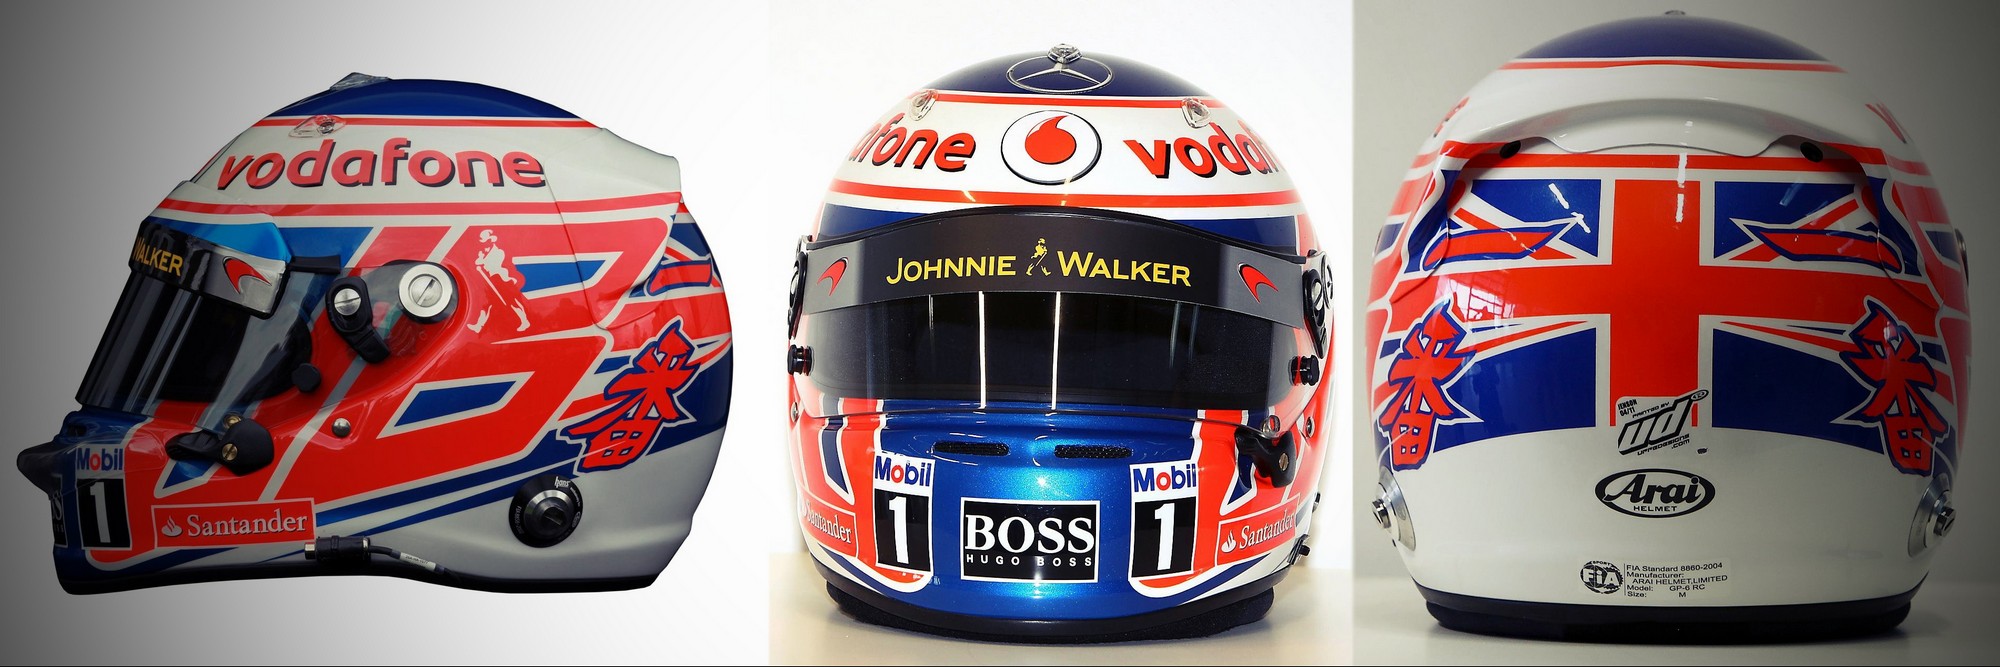 Шлем Дженсона Баттона на сезон 2012 года | 2012 helmet of Jenson Button